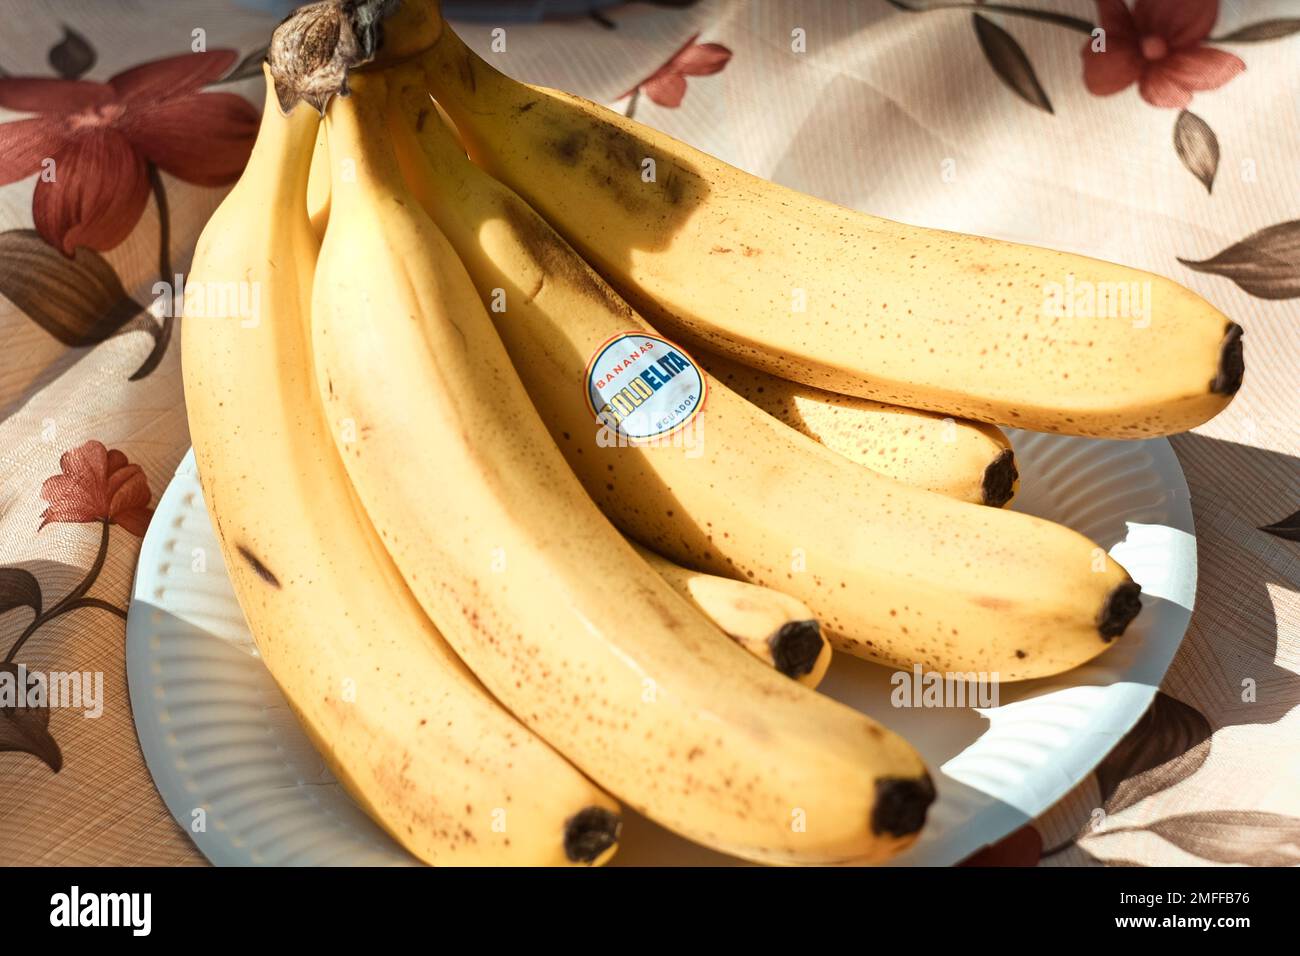 https://c8.alamy.com/comp/2MFFB76/close-up-organic-fresh-bananas-bunch-on-plate-concept-photo-2MFFB76.jpg